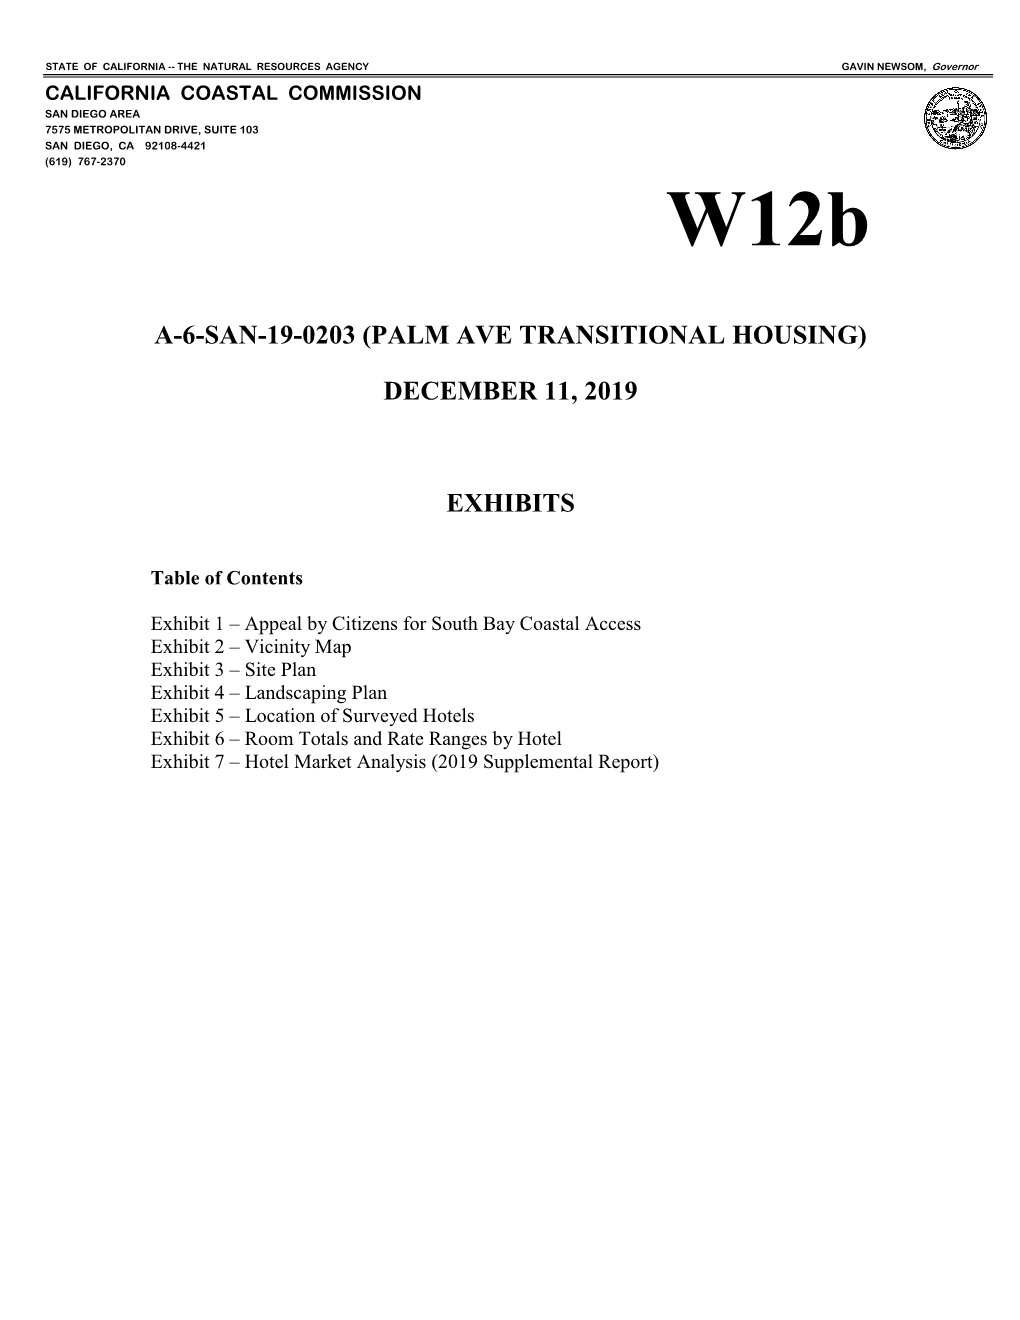 A-6-San-19-0203 (Palm Ave Transitional Housing)